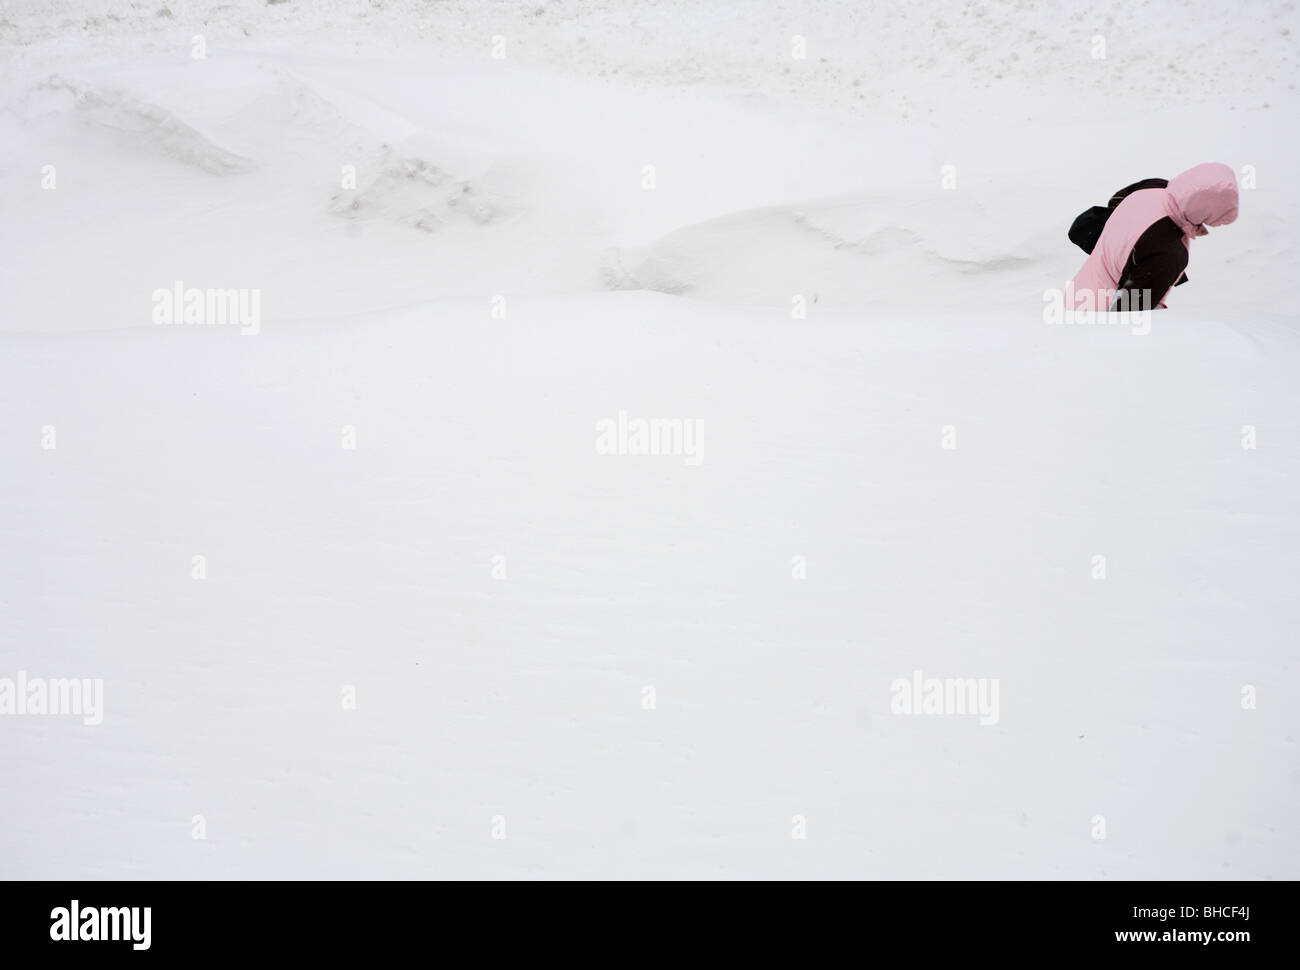 Washington DC escenas de nieve. Foto de stock